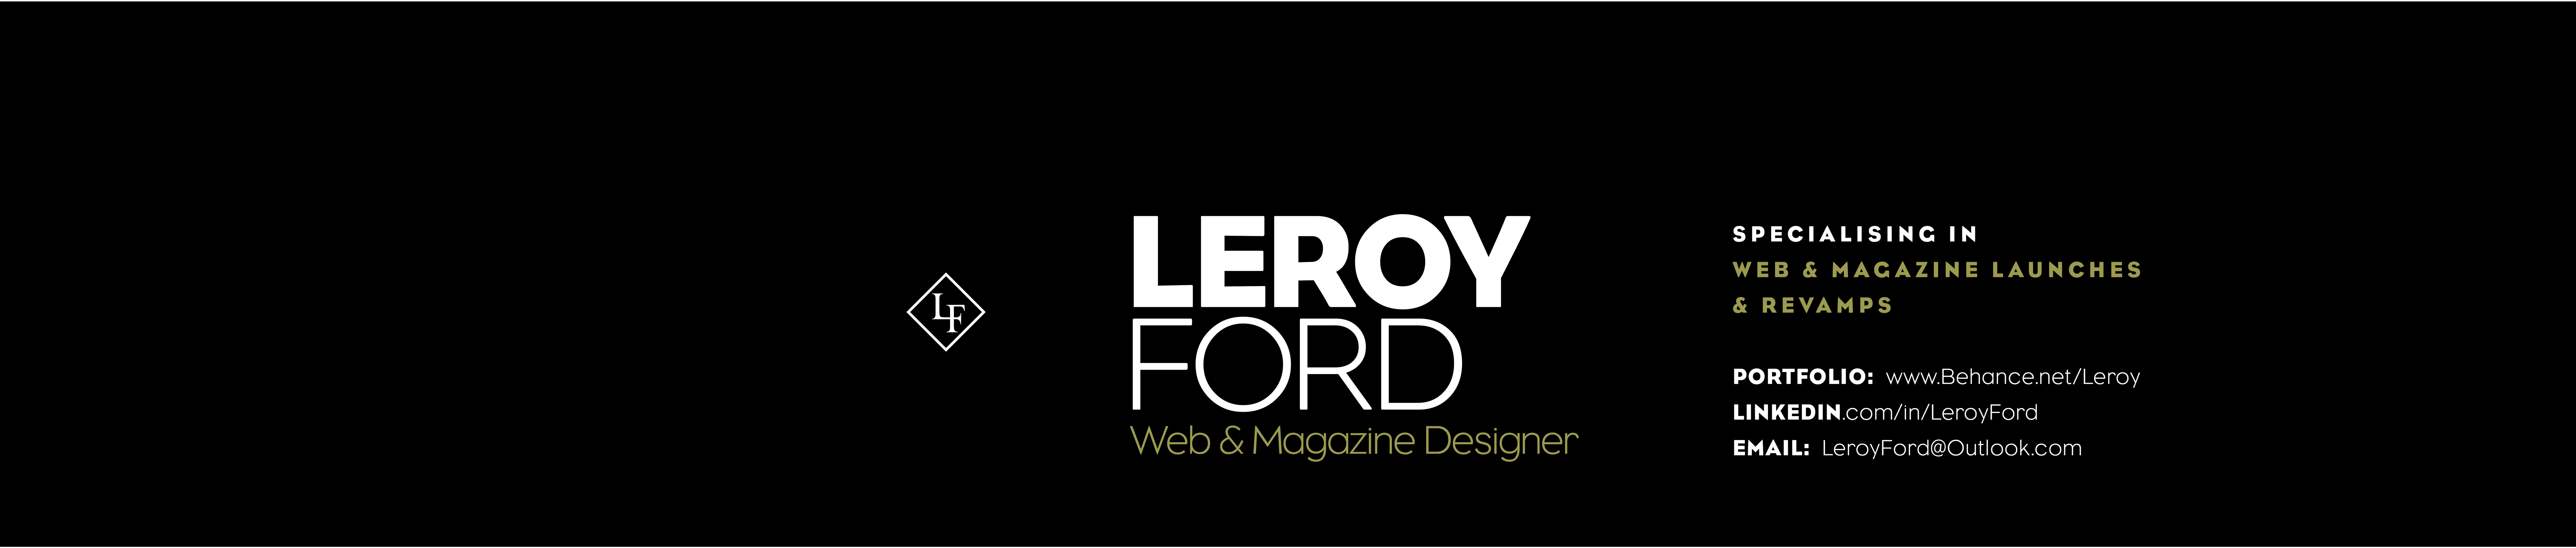 Баннер профиля LEROY FORD